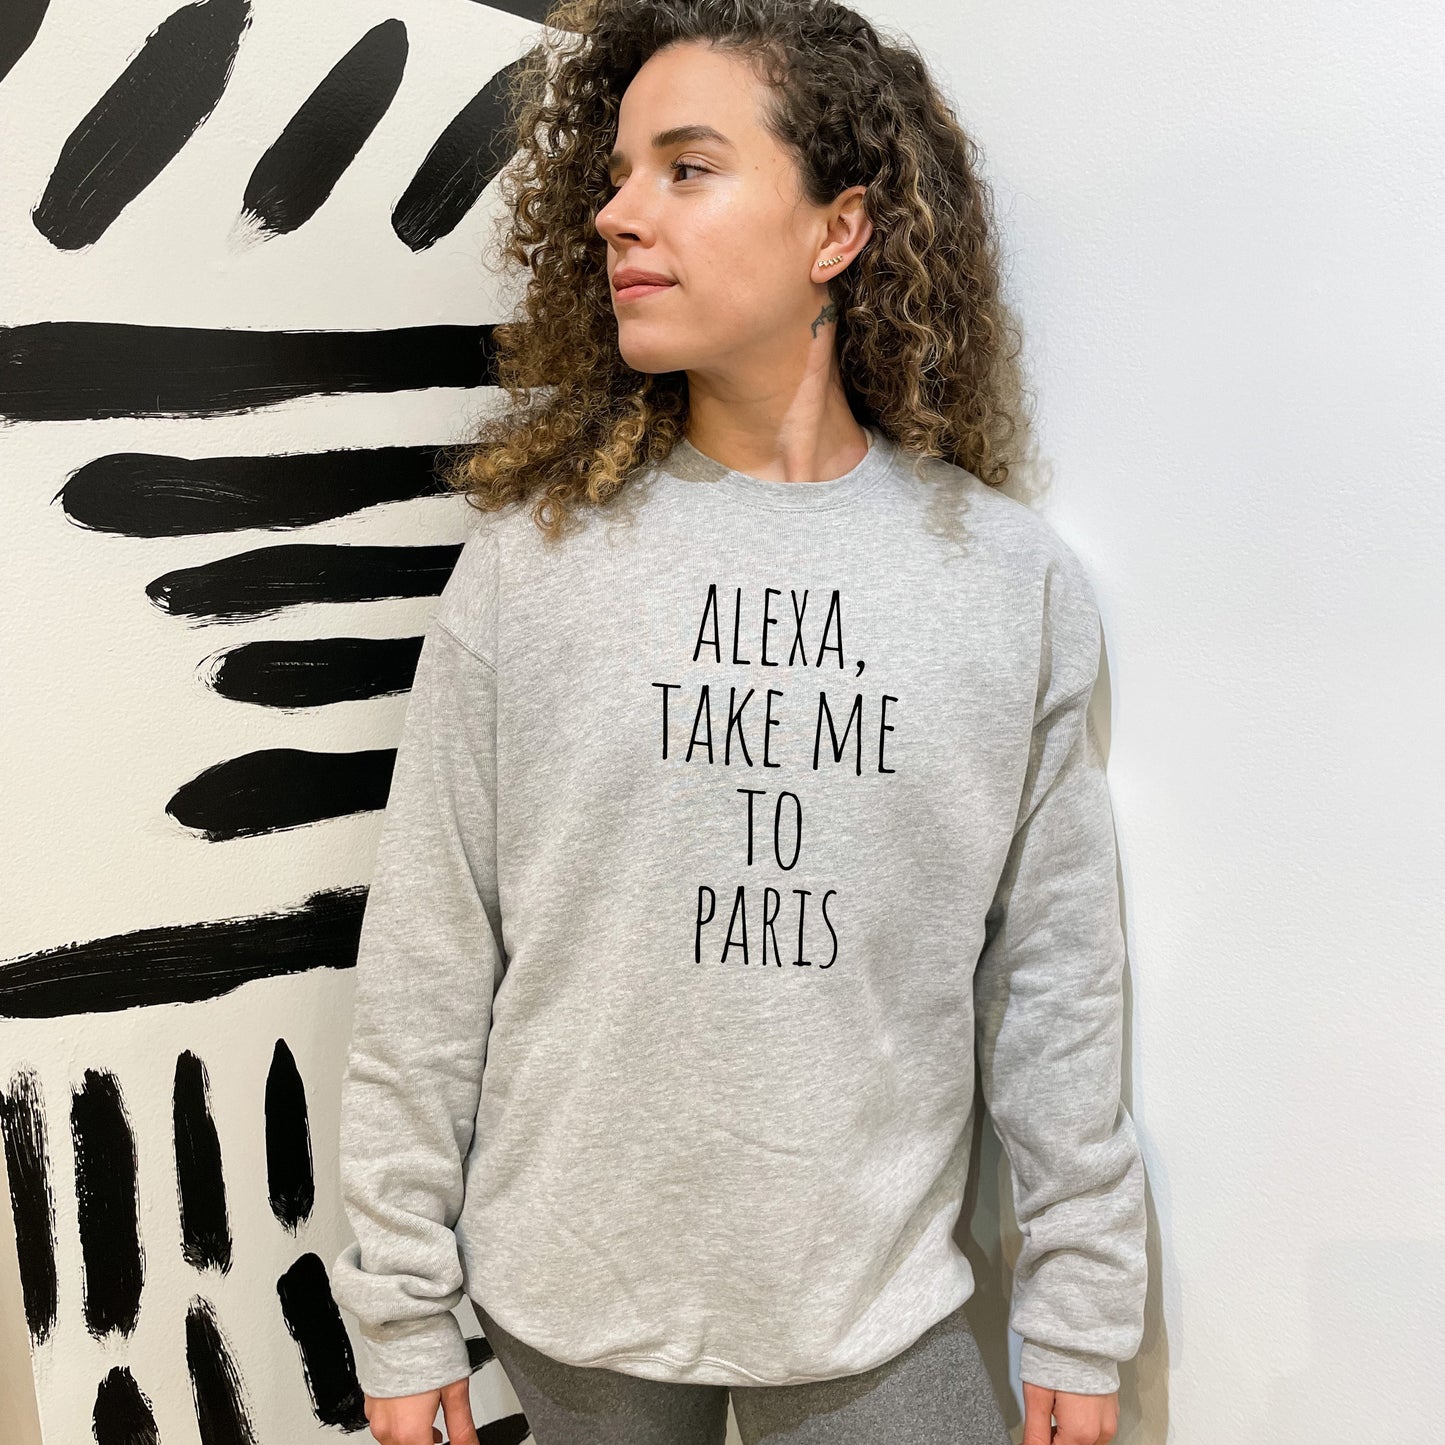 Alexa, Take Me To Paris - Unisex Sweatshirt - Heather Gray or Dusty Blue